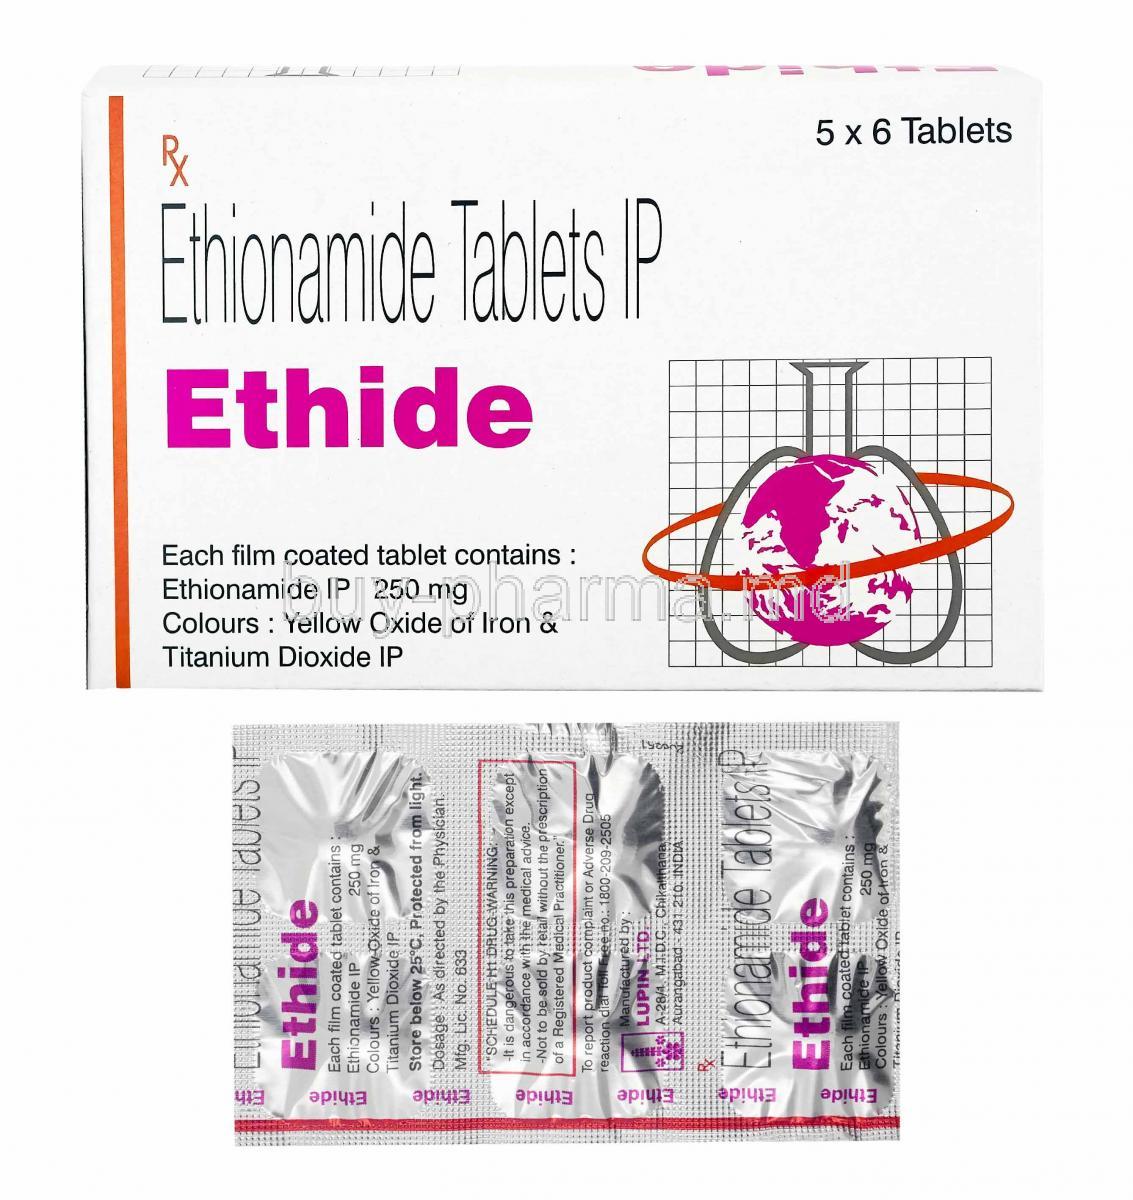 Ethide, Ethionamide box and tablets